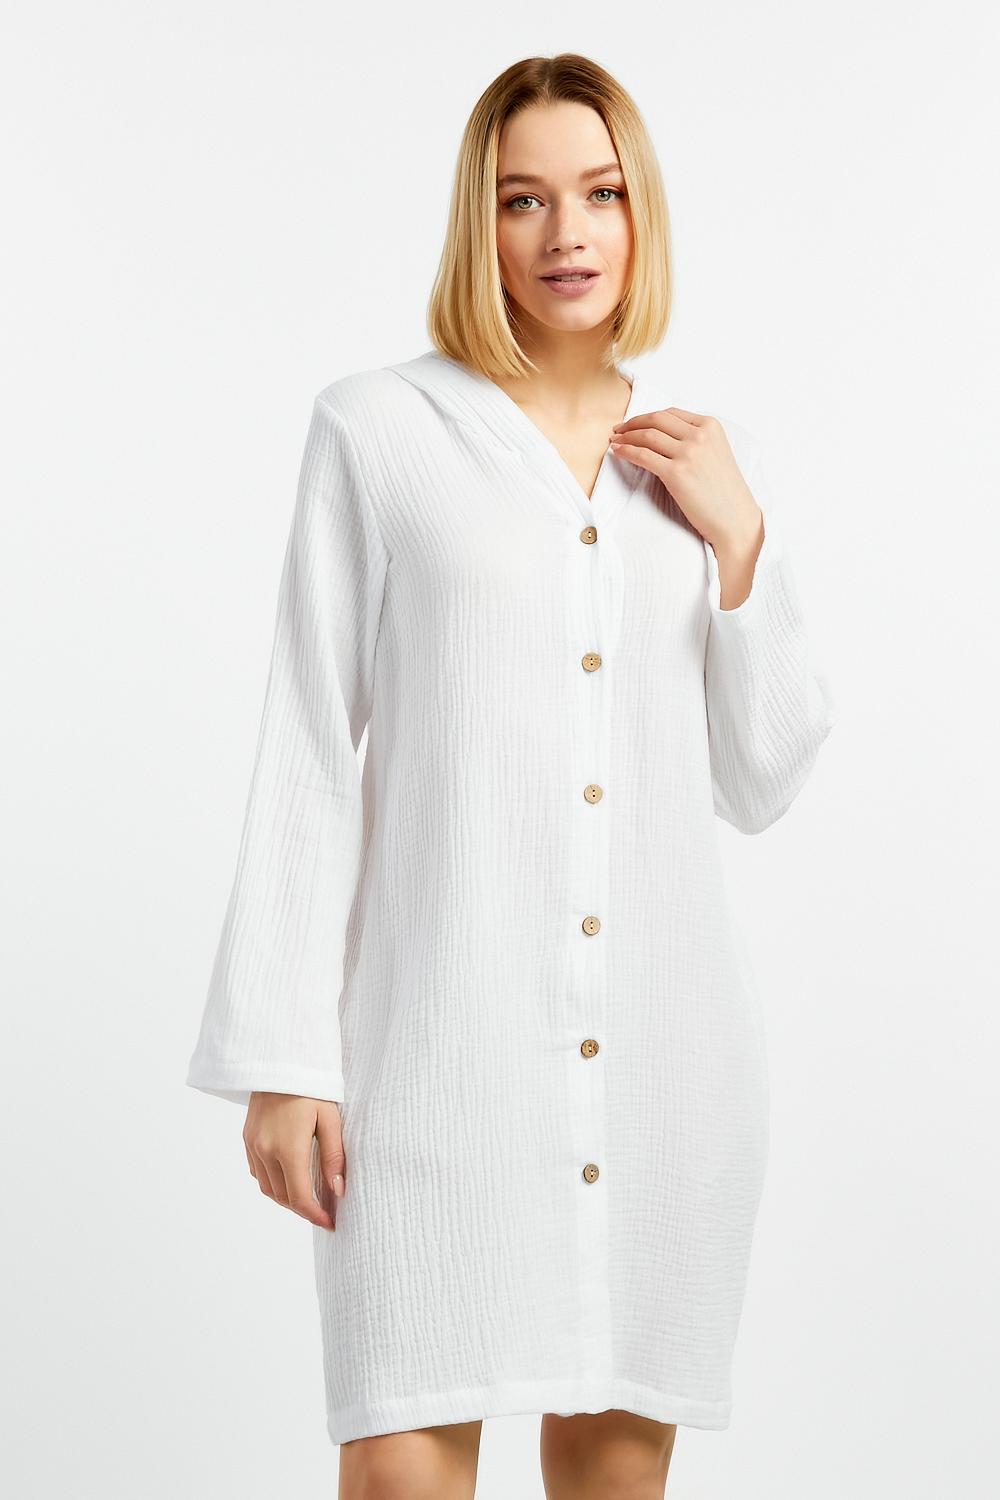 Платье женское LikaDress 18-1689 белое 56 RU